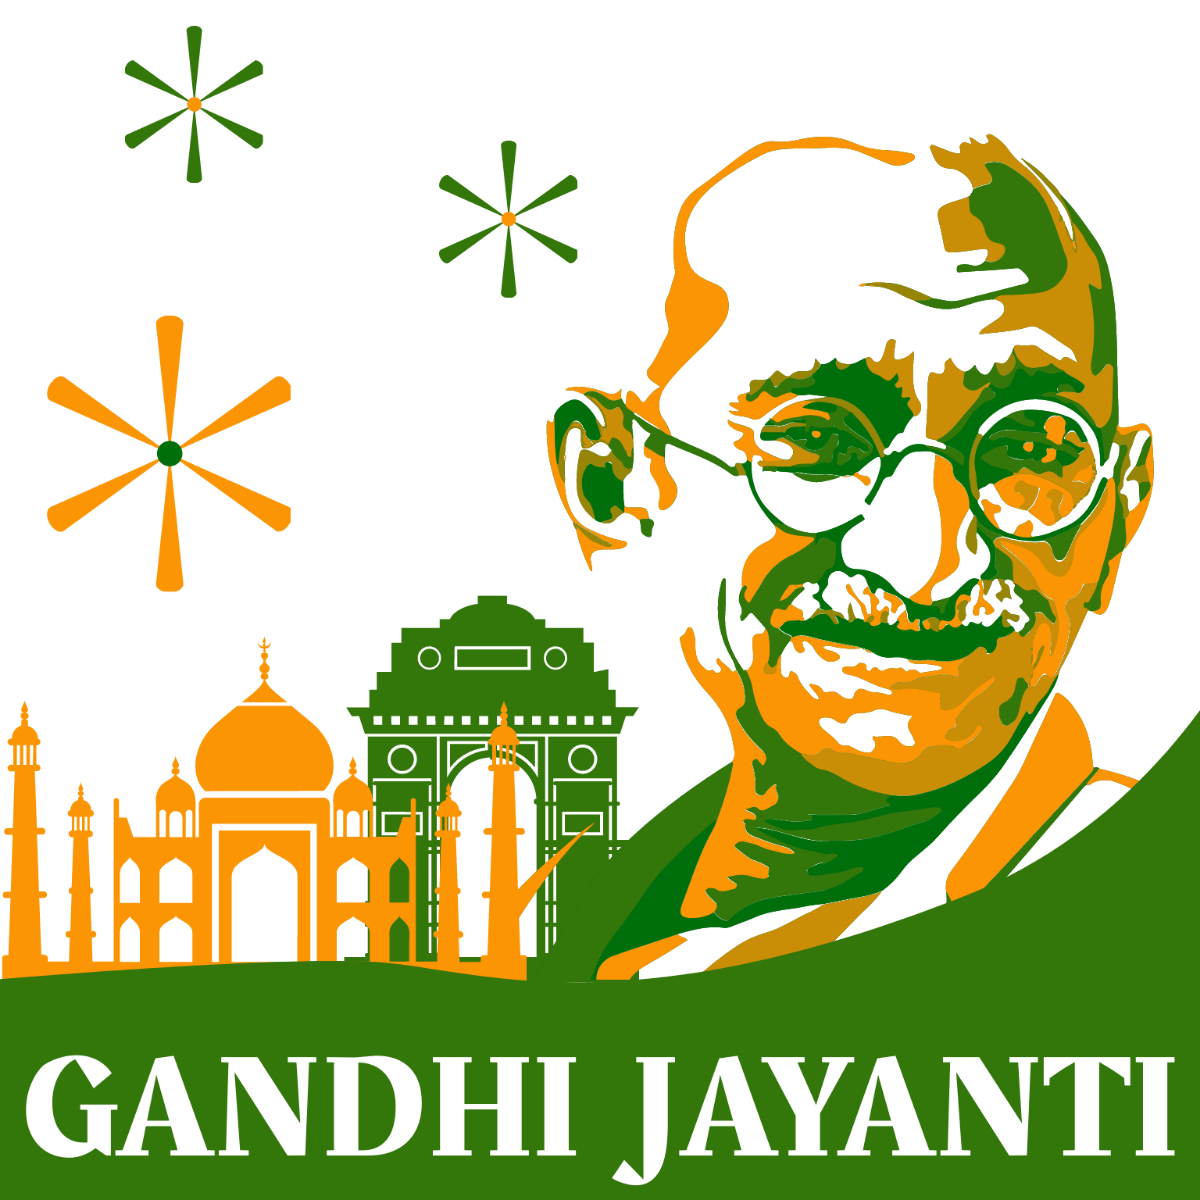 Mahatma gandhi line drawing jayanti Royalty Free Vector